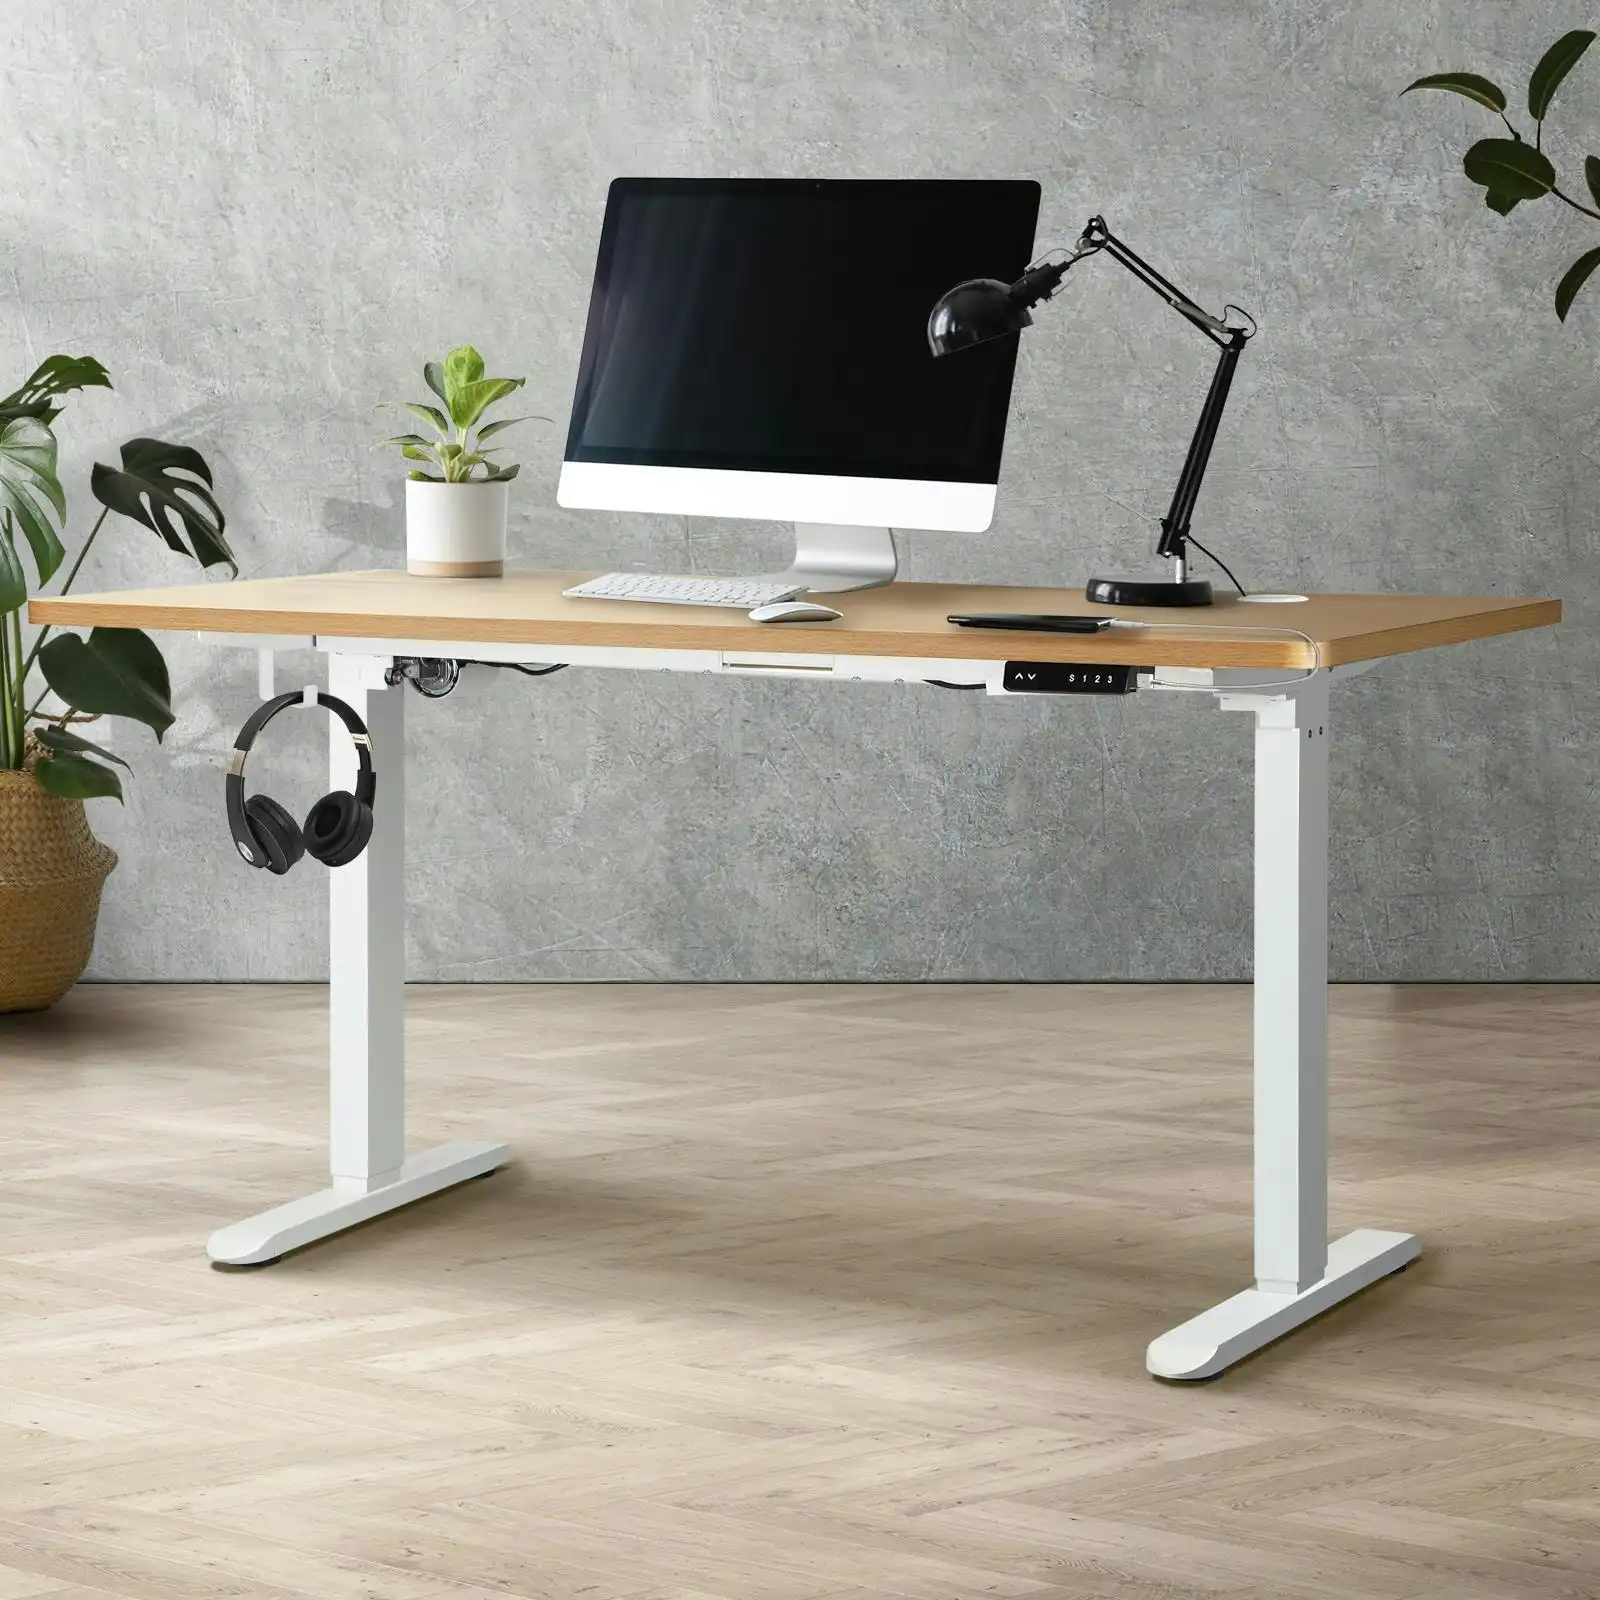 Oikiture 120cm Electric Standing Desk Single Motor OAK Desktop With USB&Type C Port